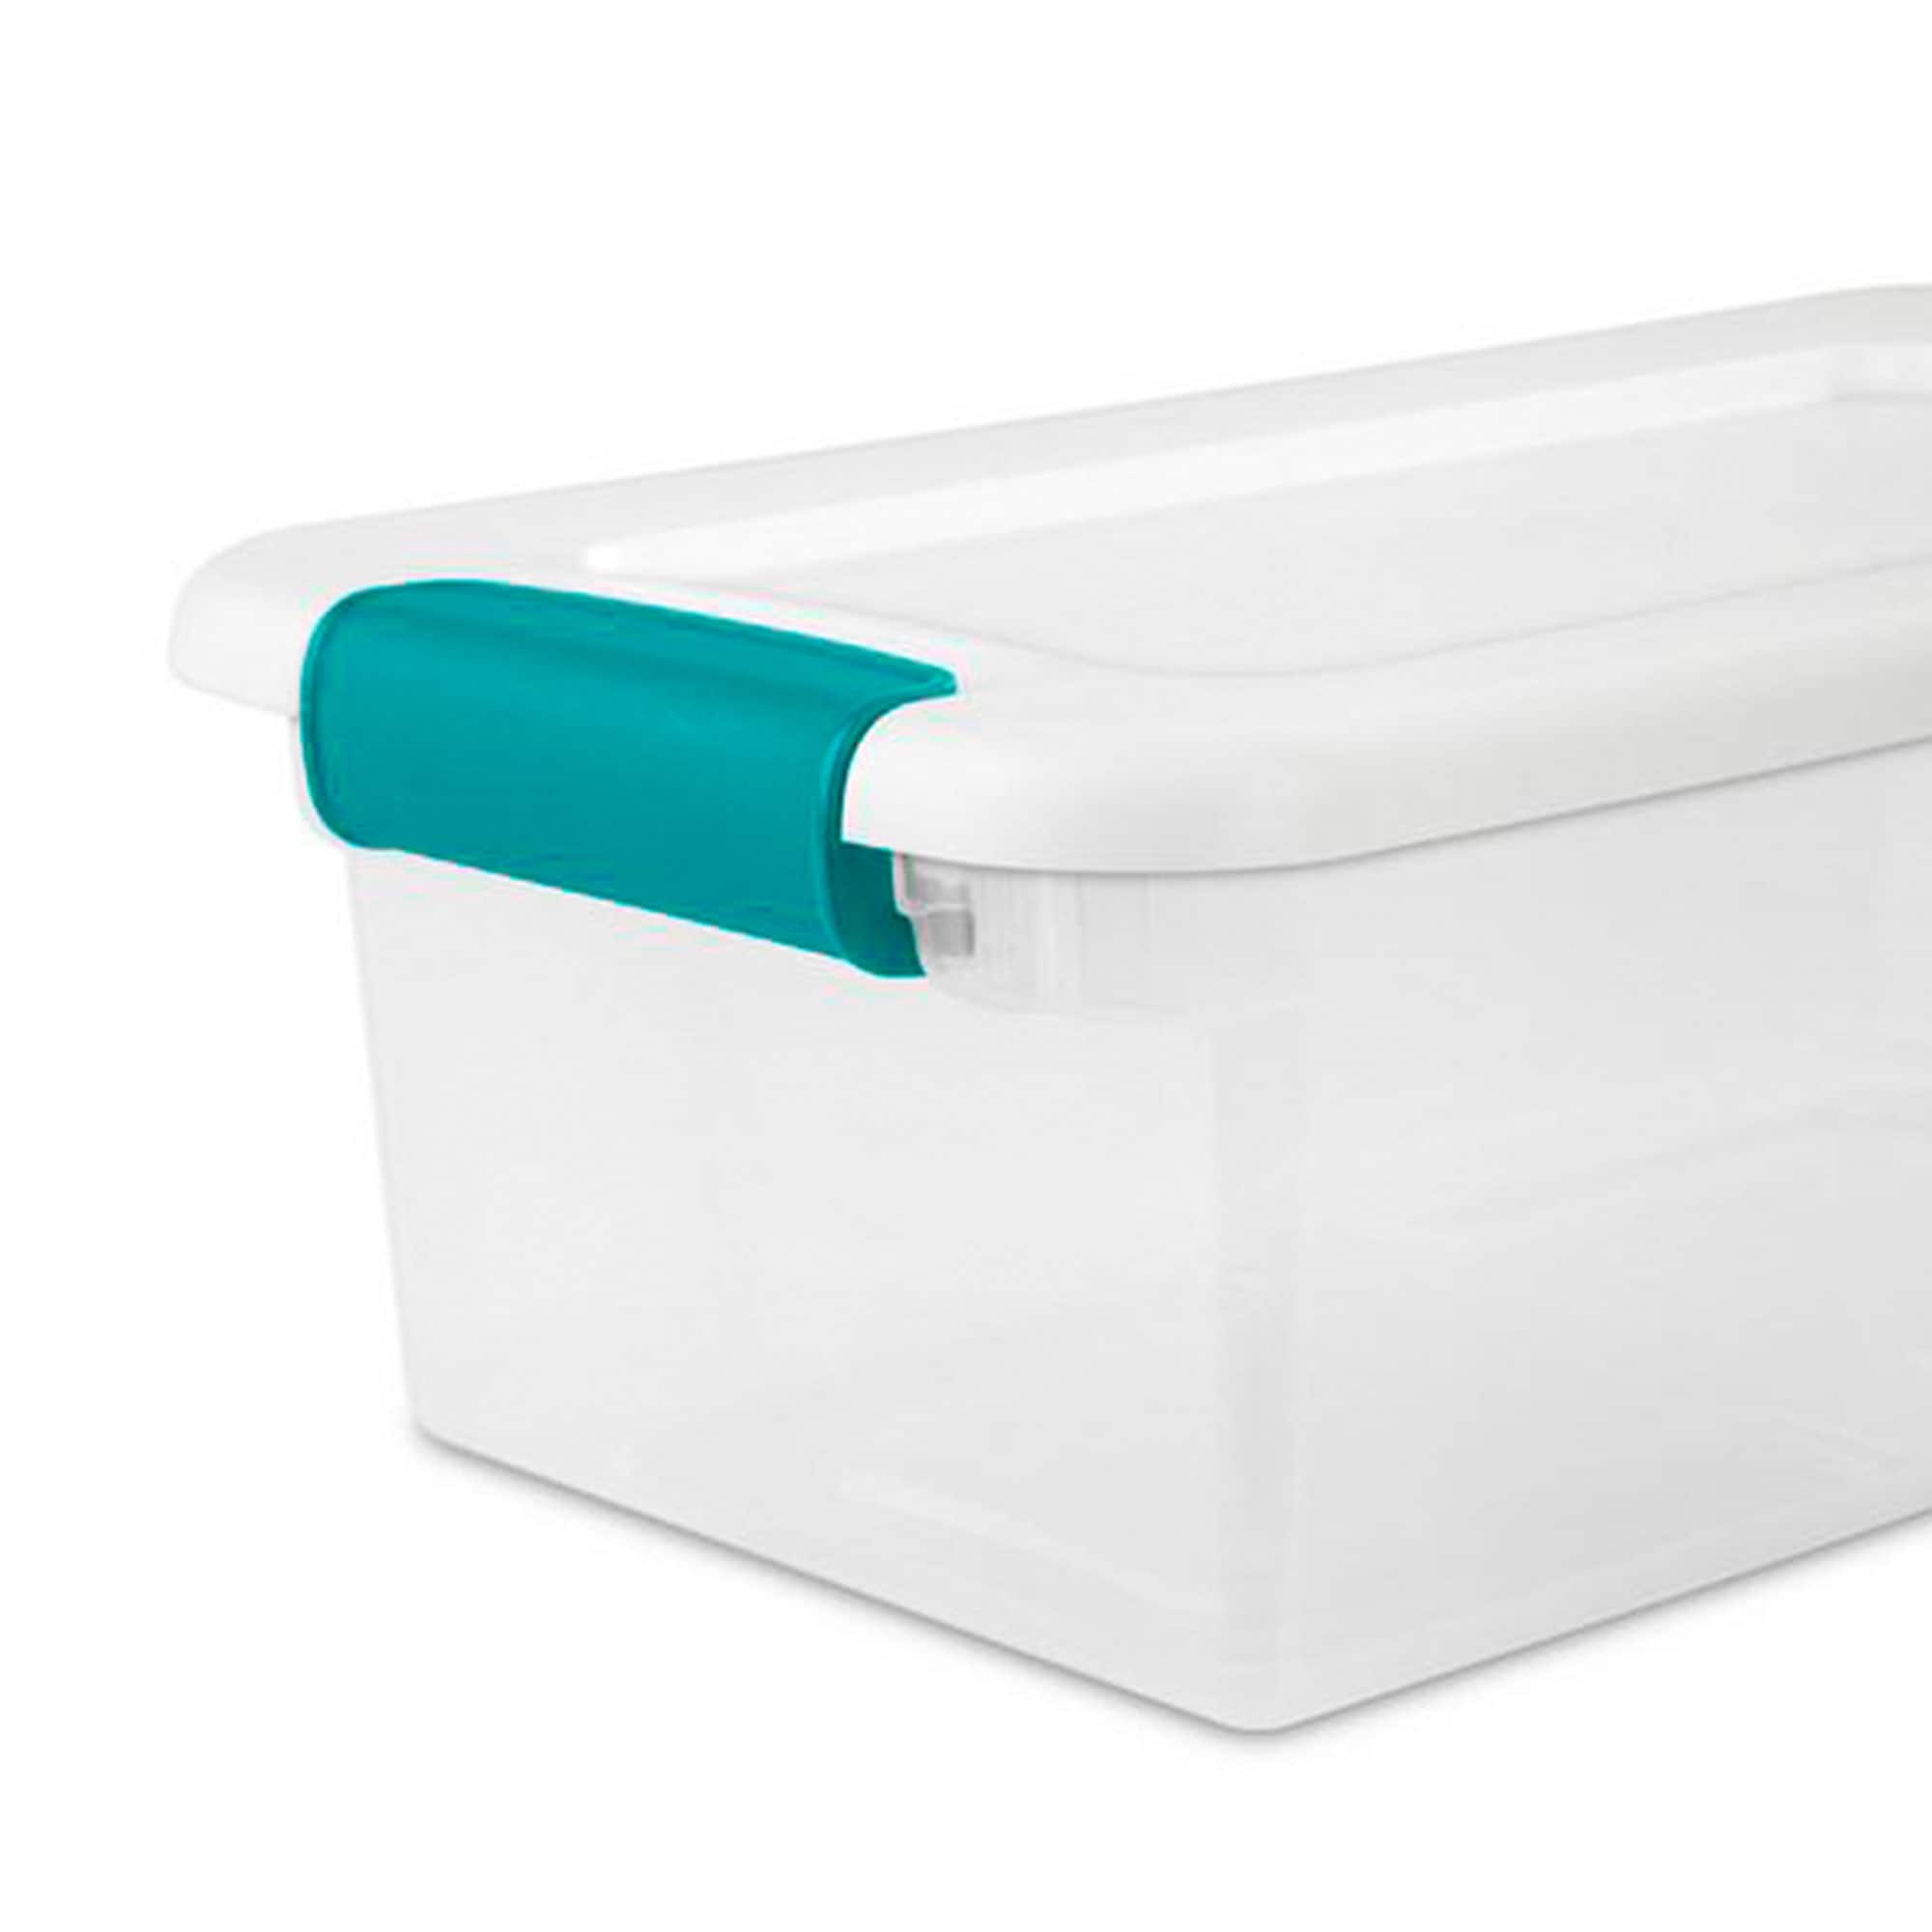 Sterilite Clear Plastic 6 Quart Storage Box Container with